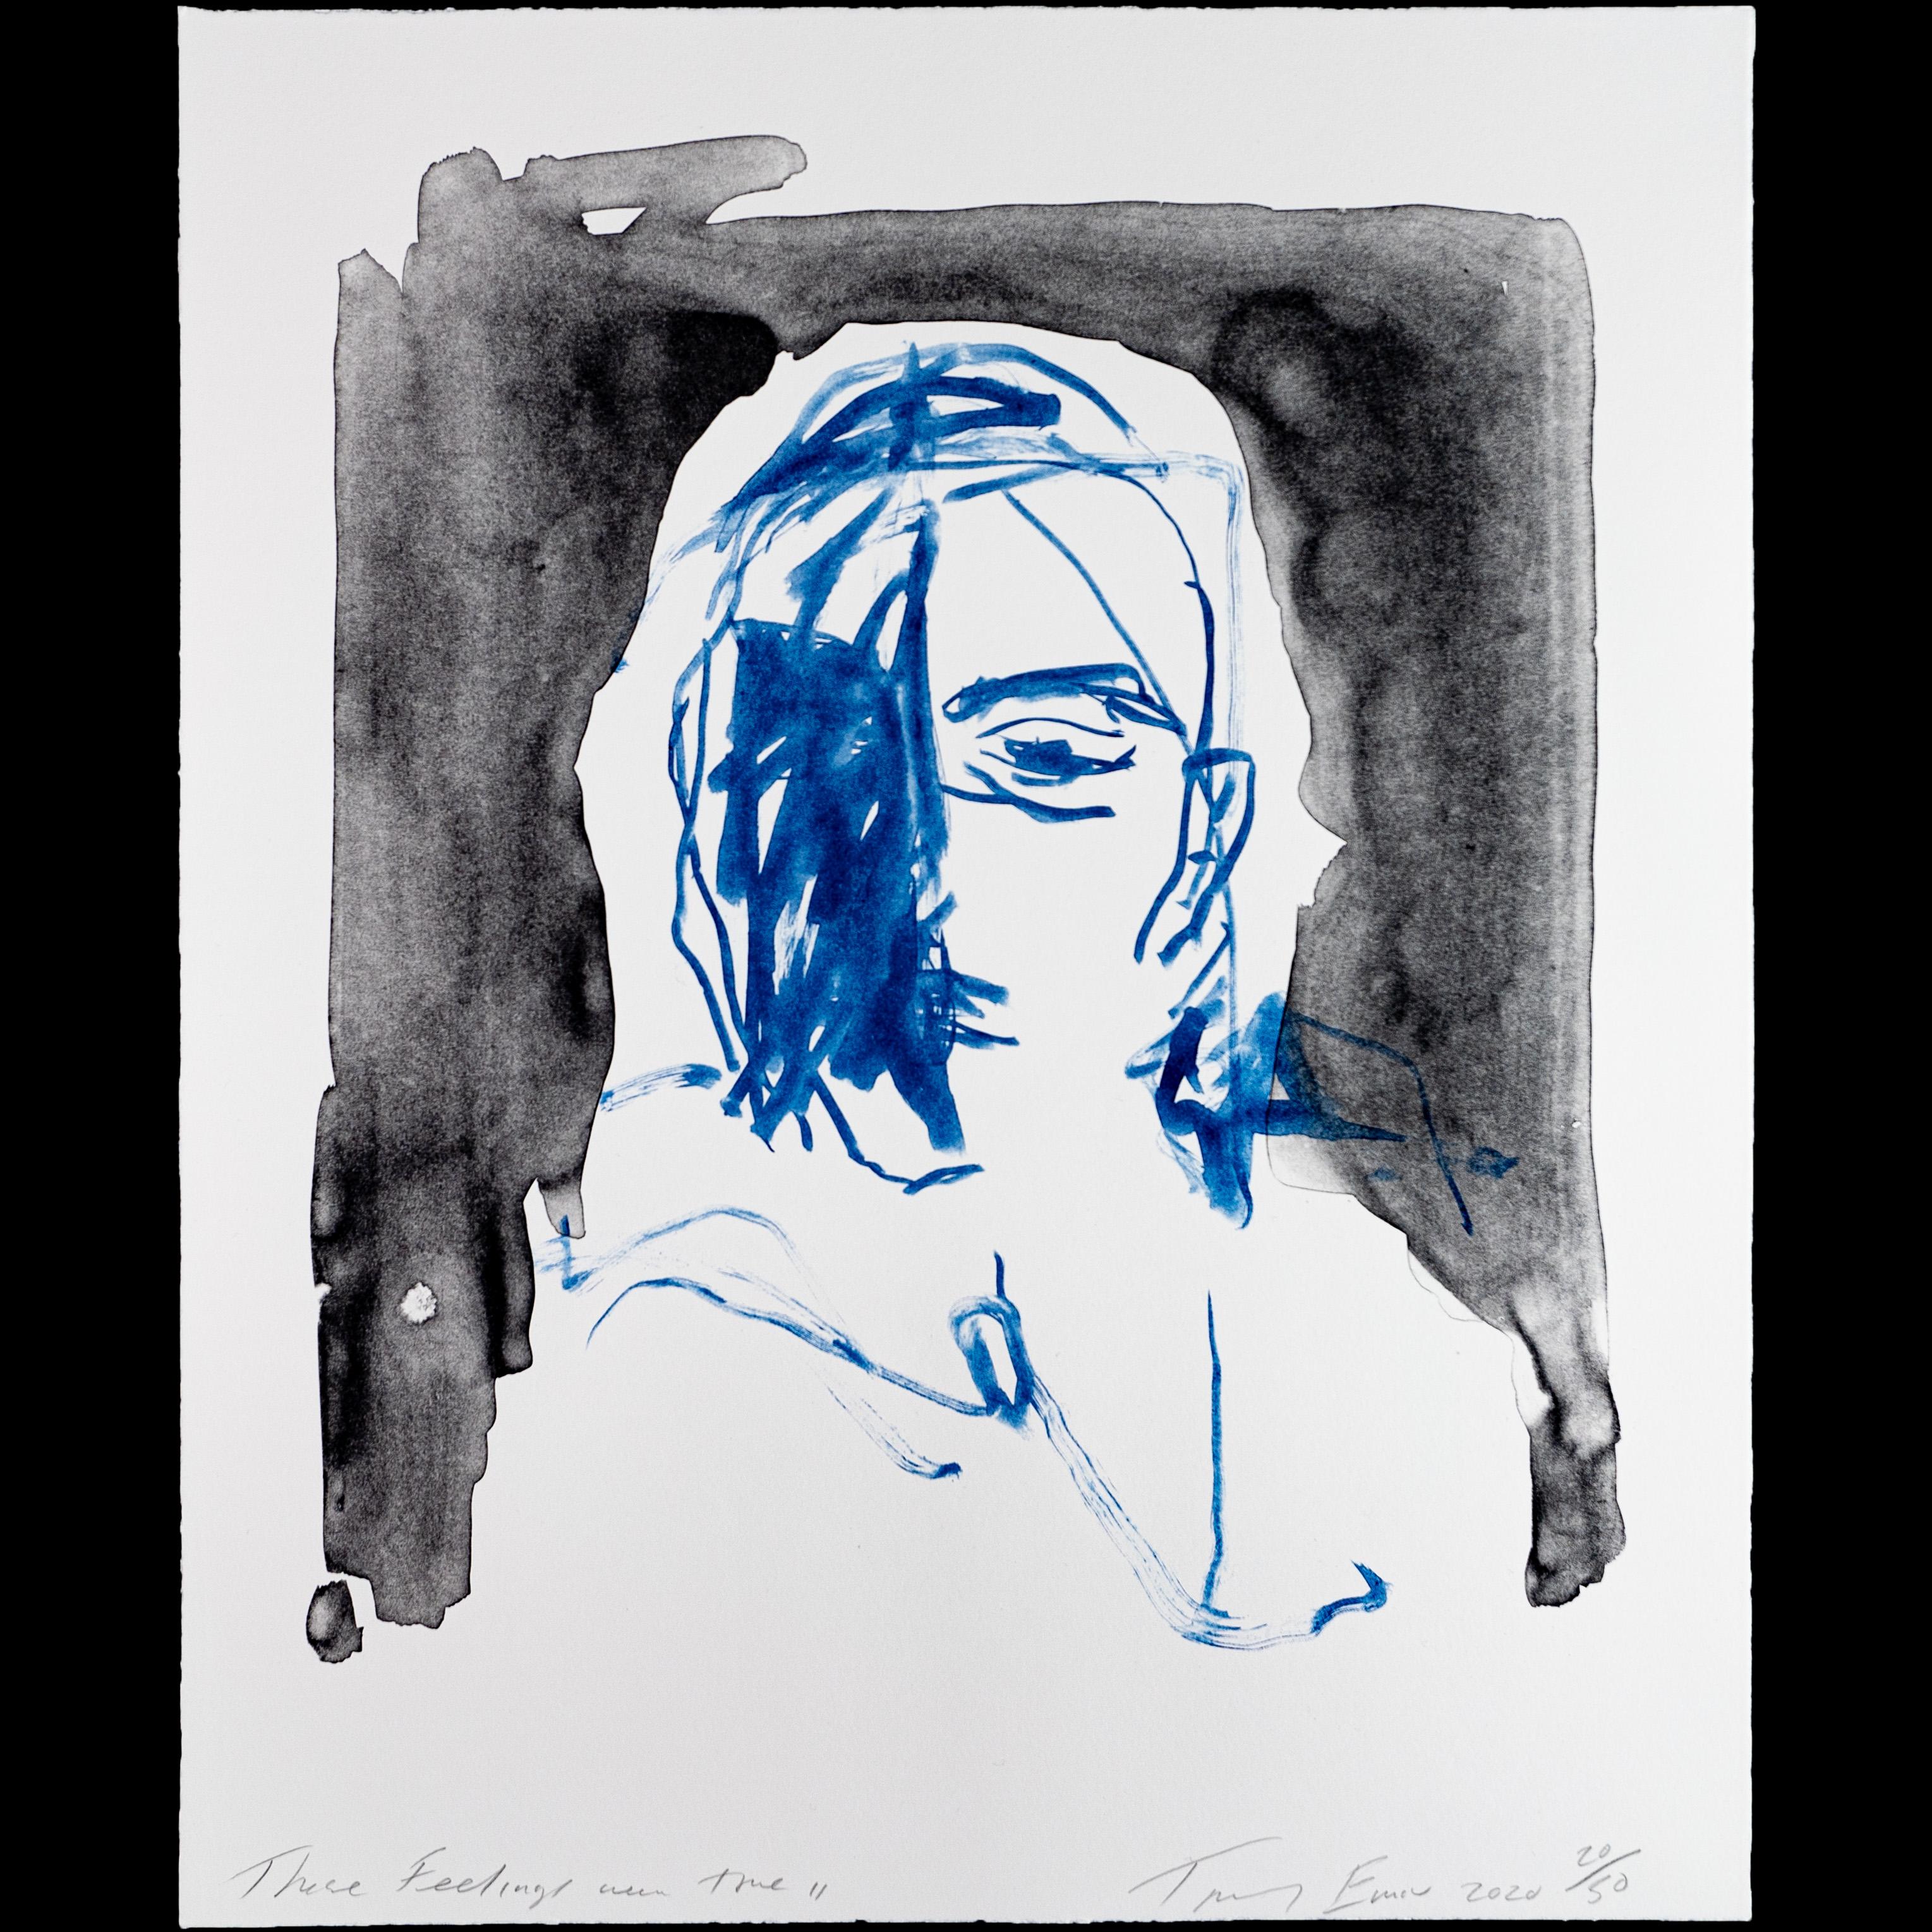 Tracey Emin Figurative Print - These Feelings Were True II - Emin, Contemporary, YBAs, Lithograph, Portrait